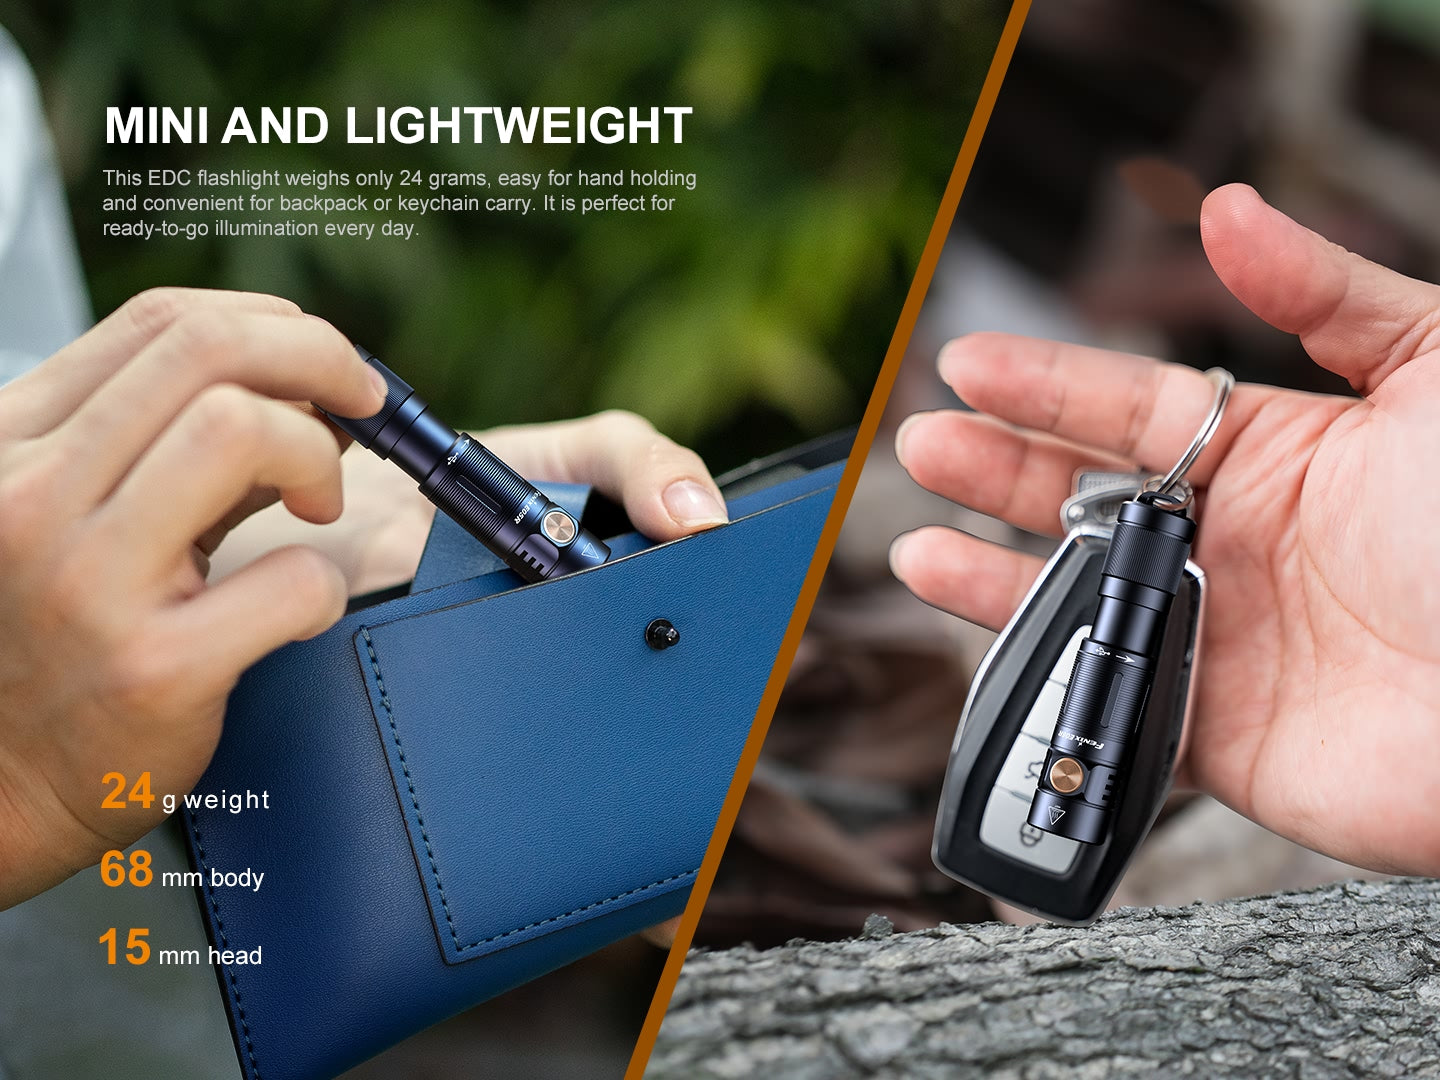 Fenix E05R Rechargeable Keychain Flashlight